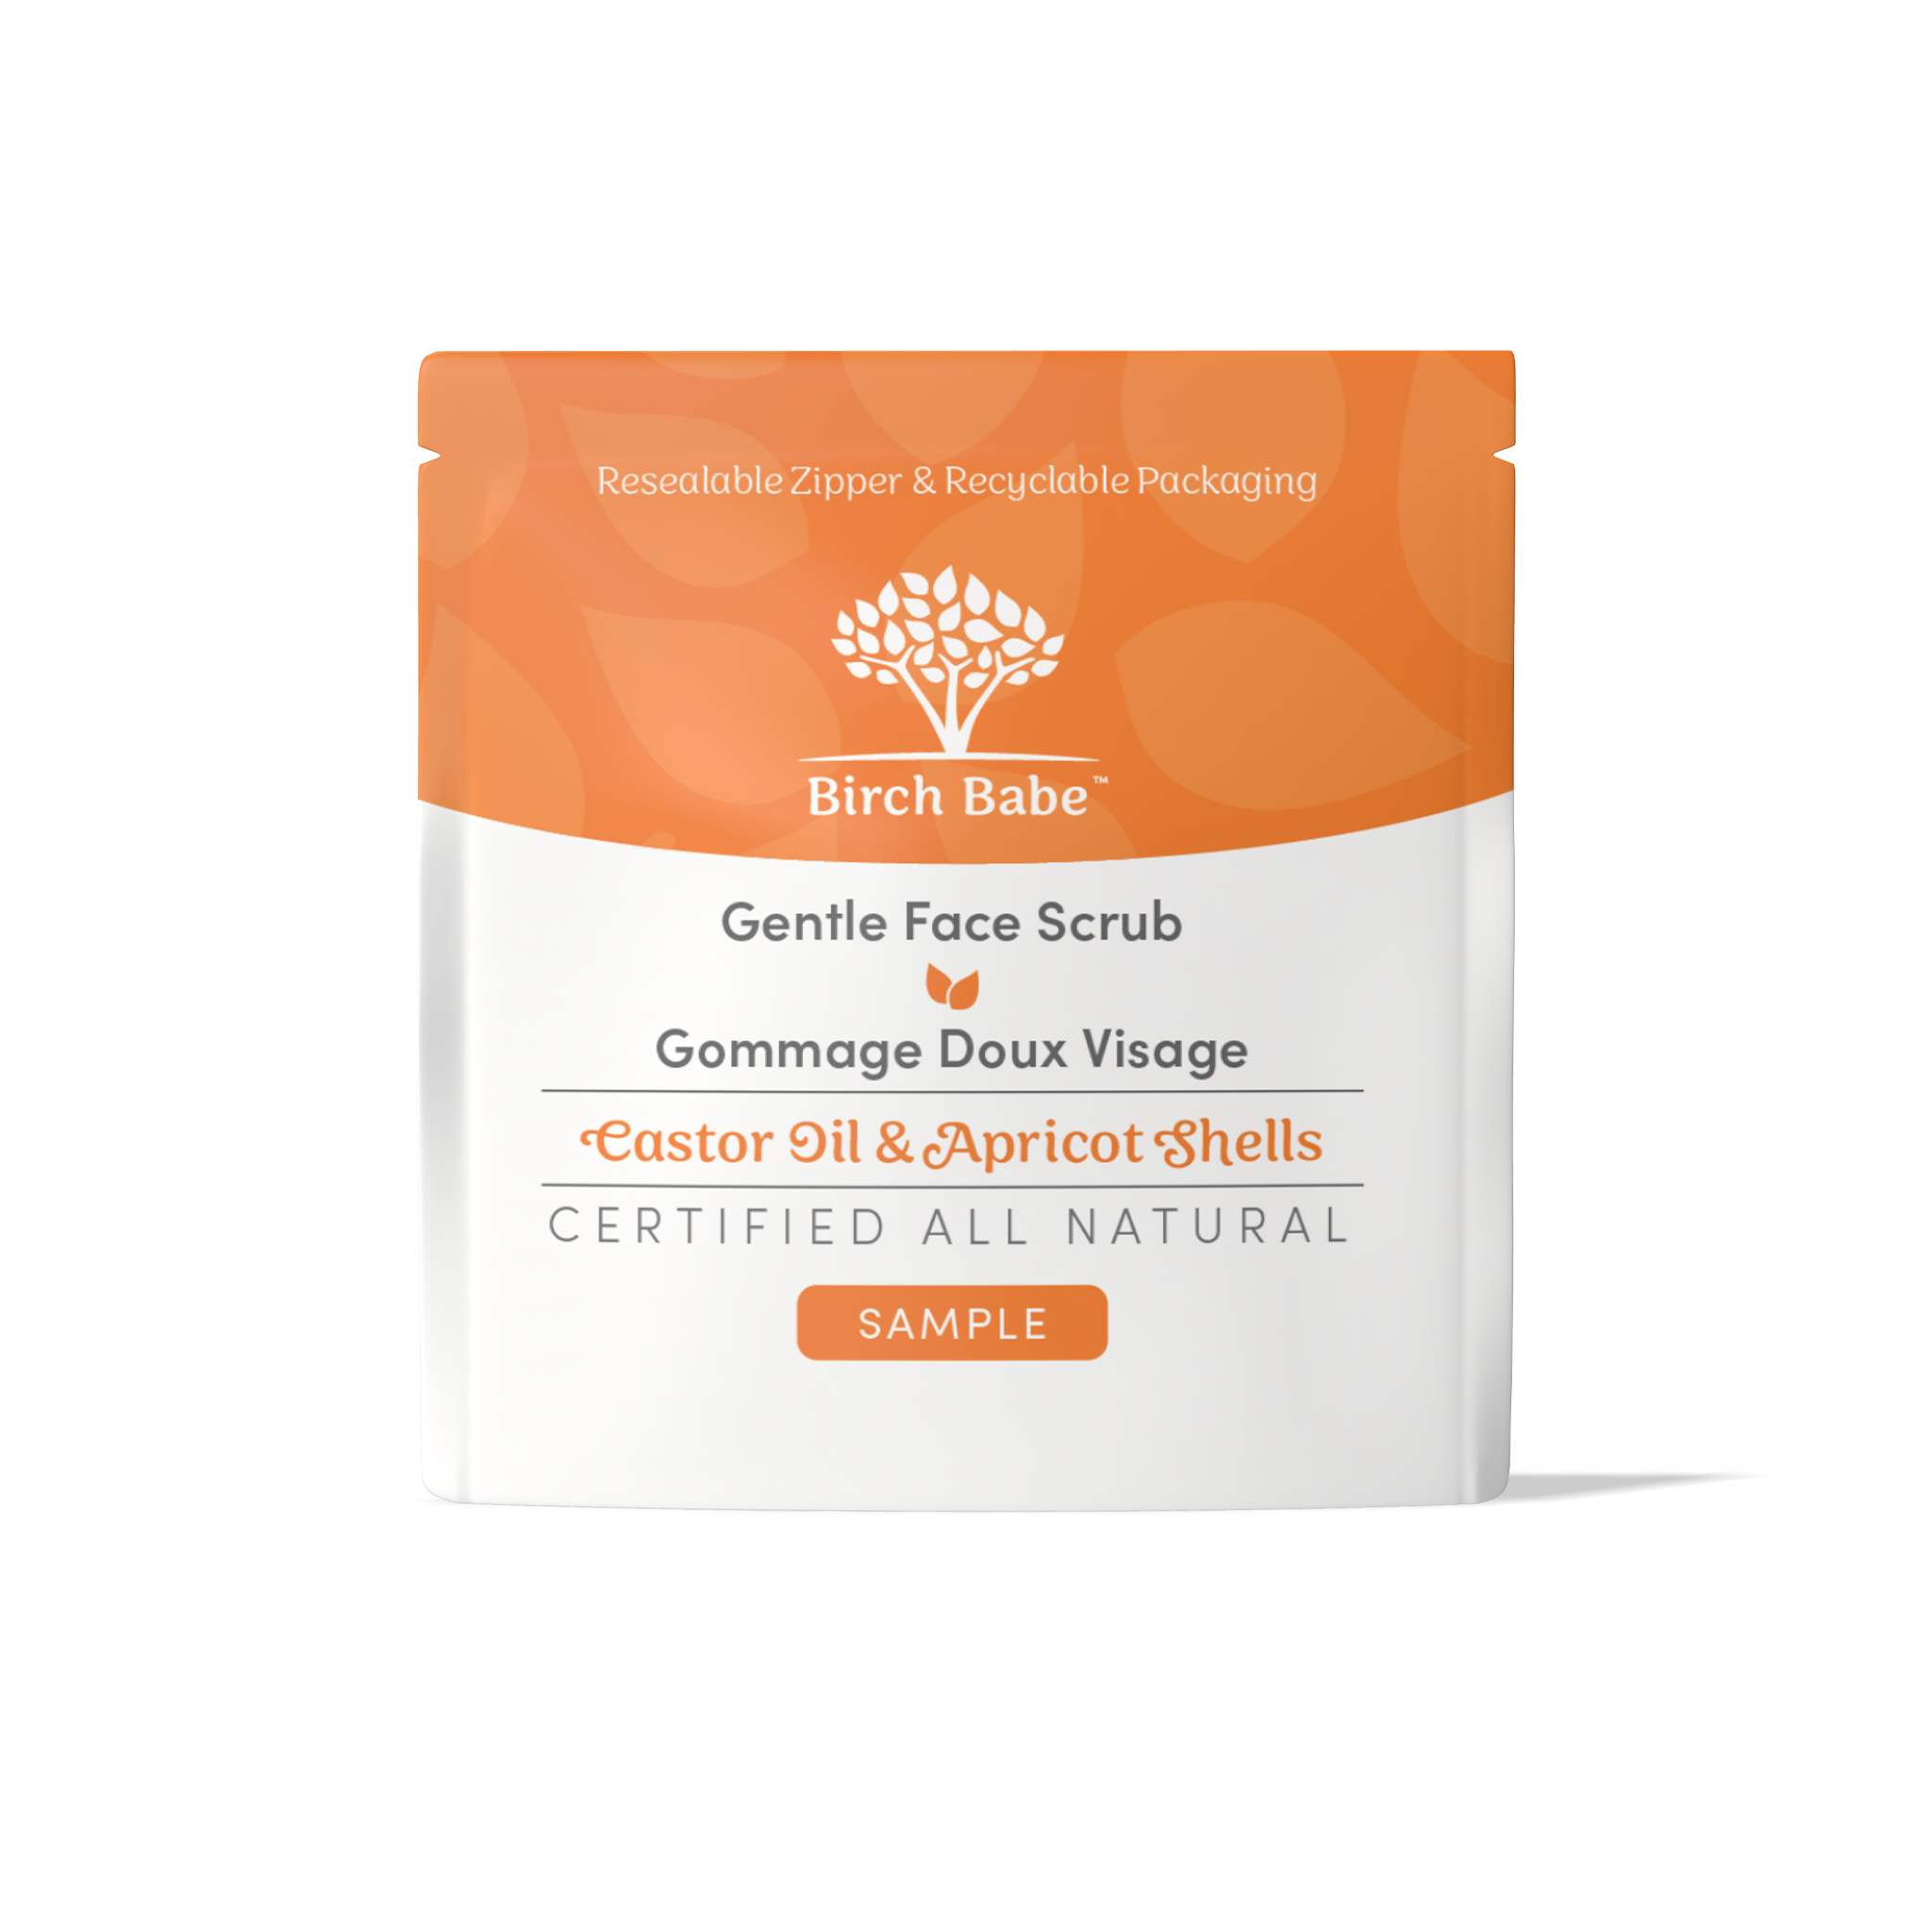 Gentle Face Scrub - Sample